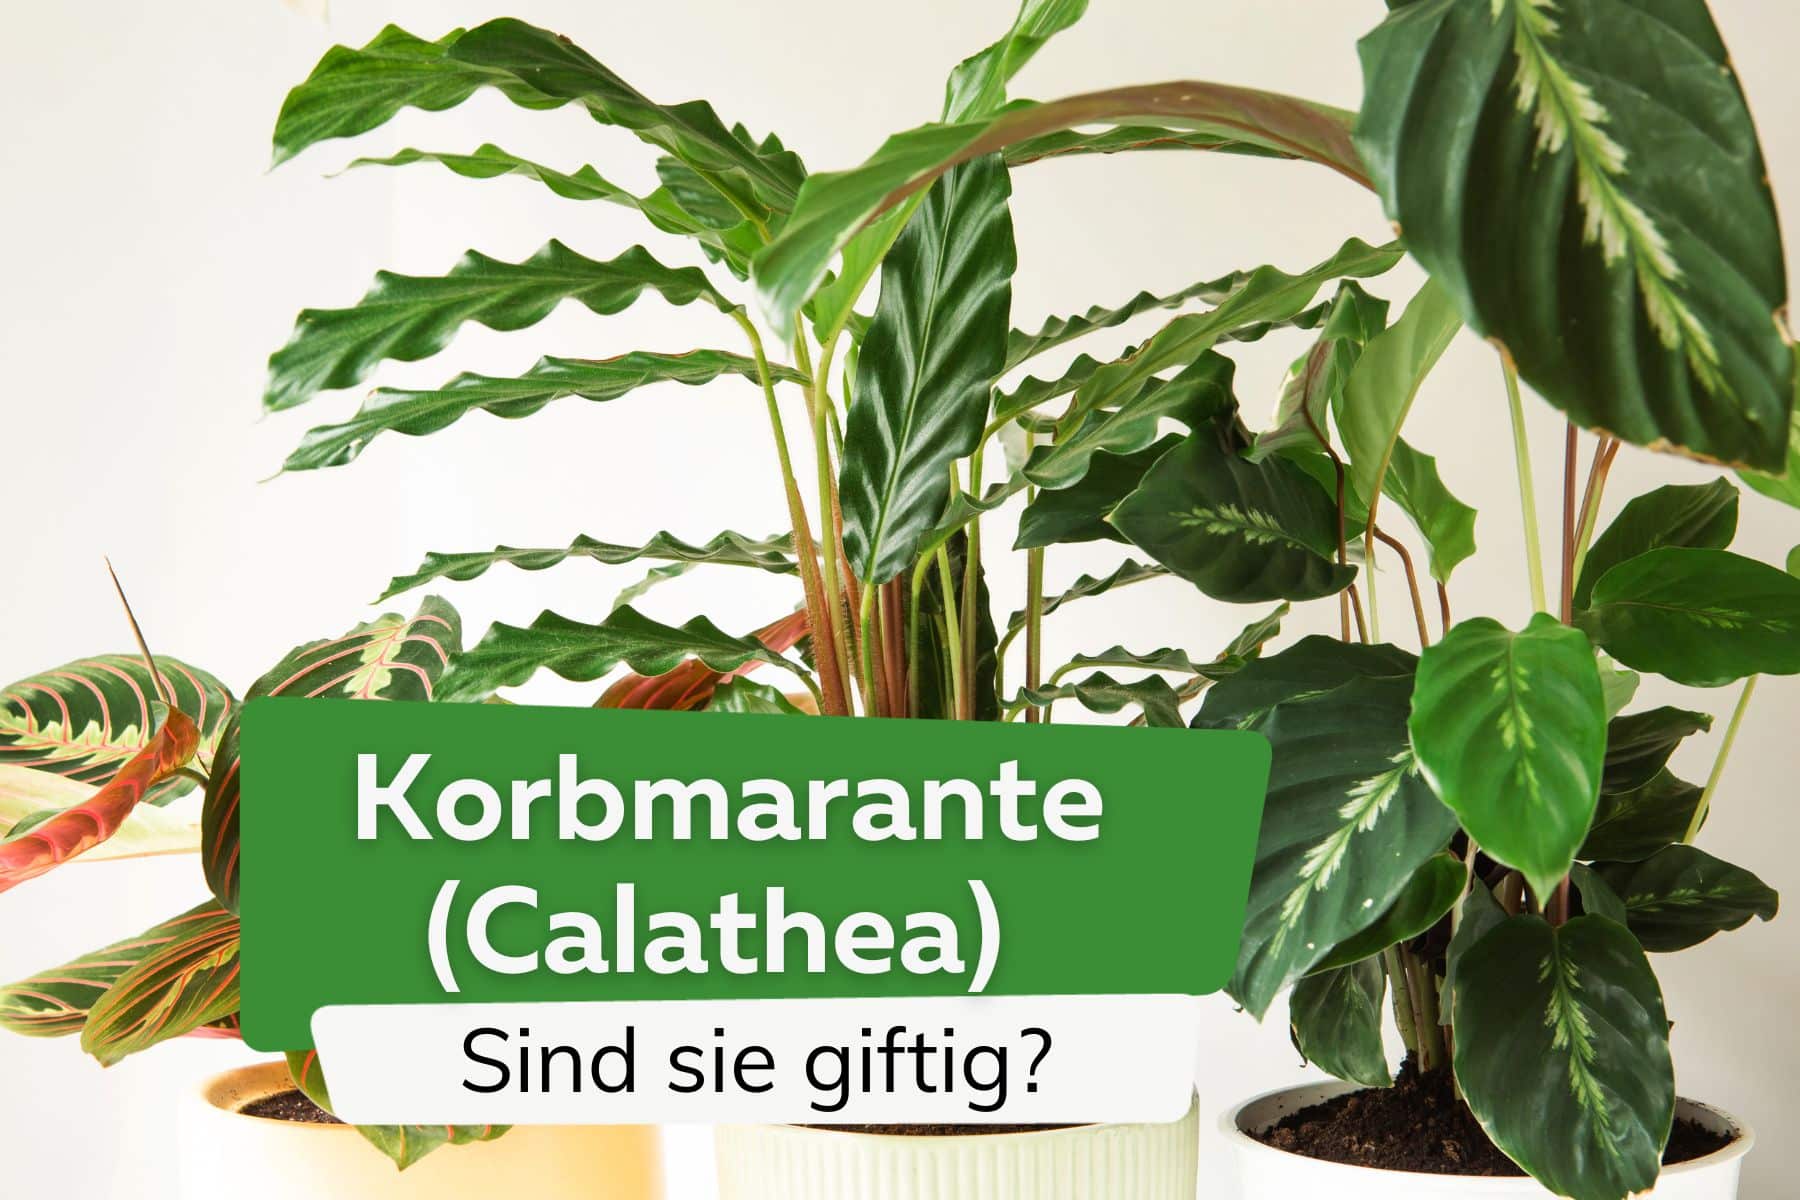 Ist die Korbmarante giftig? - Calathea Rufibarba, Lancifolia und Crocata